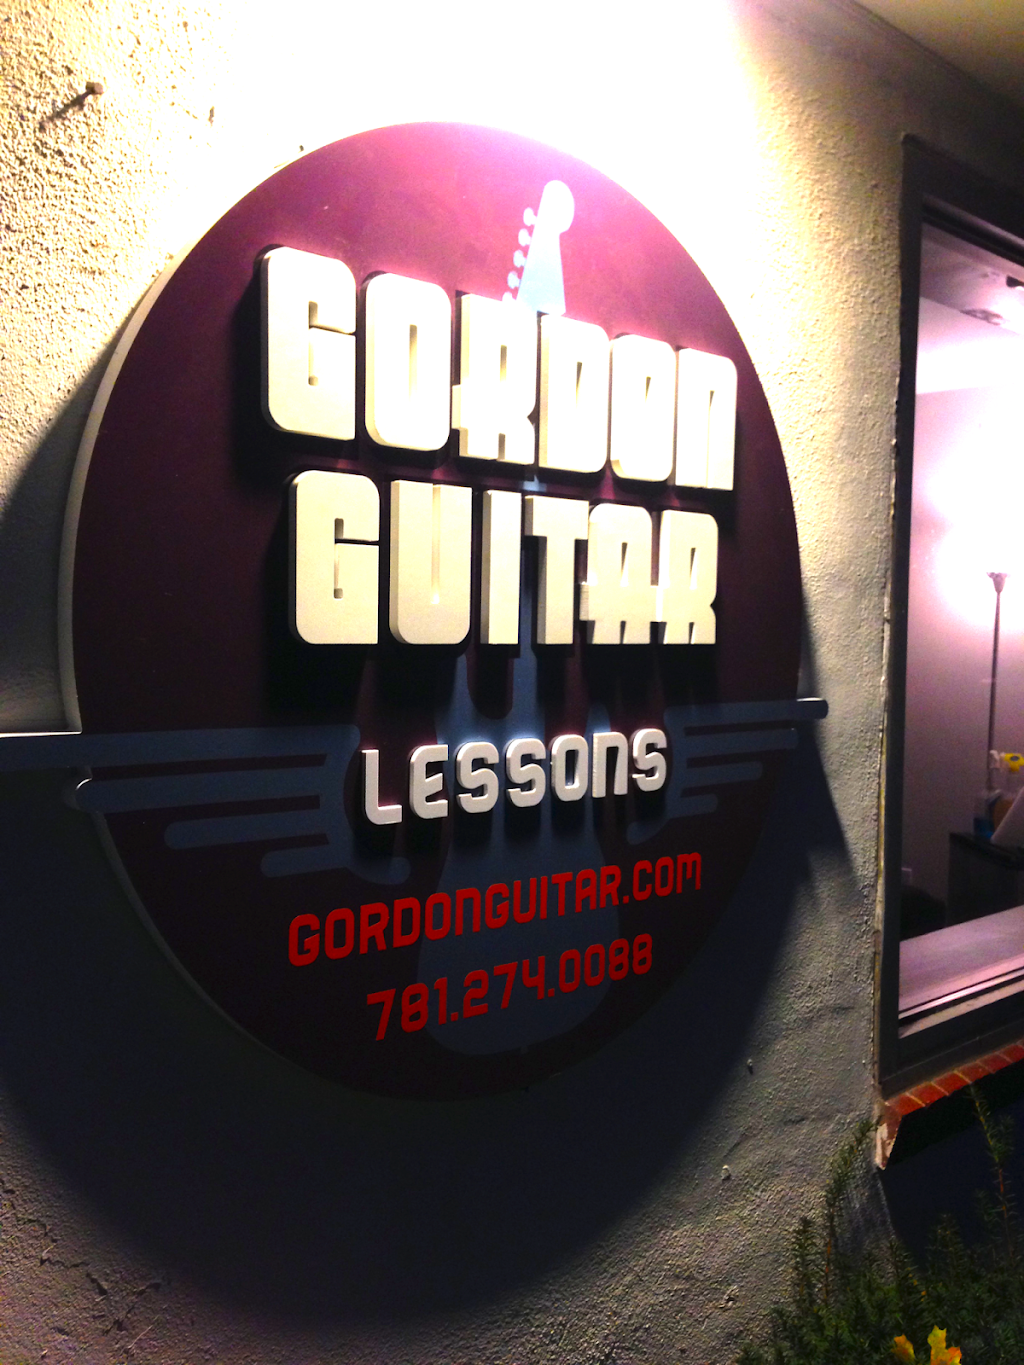 Gordon Guitar Lessons | 235 Bedford St, Lexington, MA 02420 | Phone: (781) 274-0088